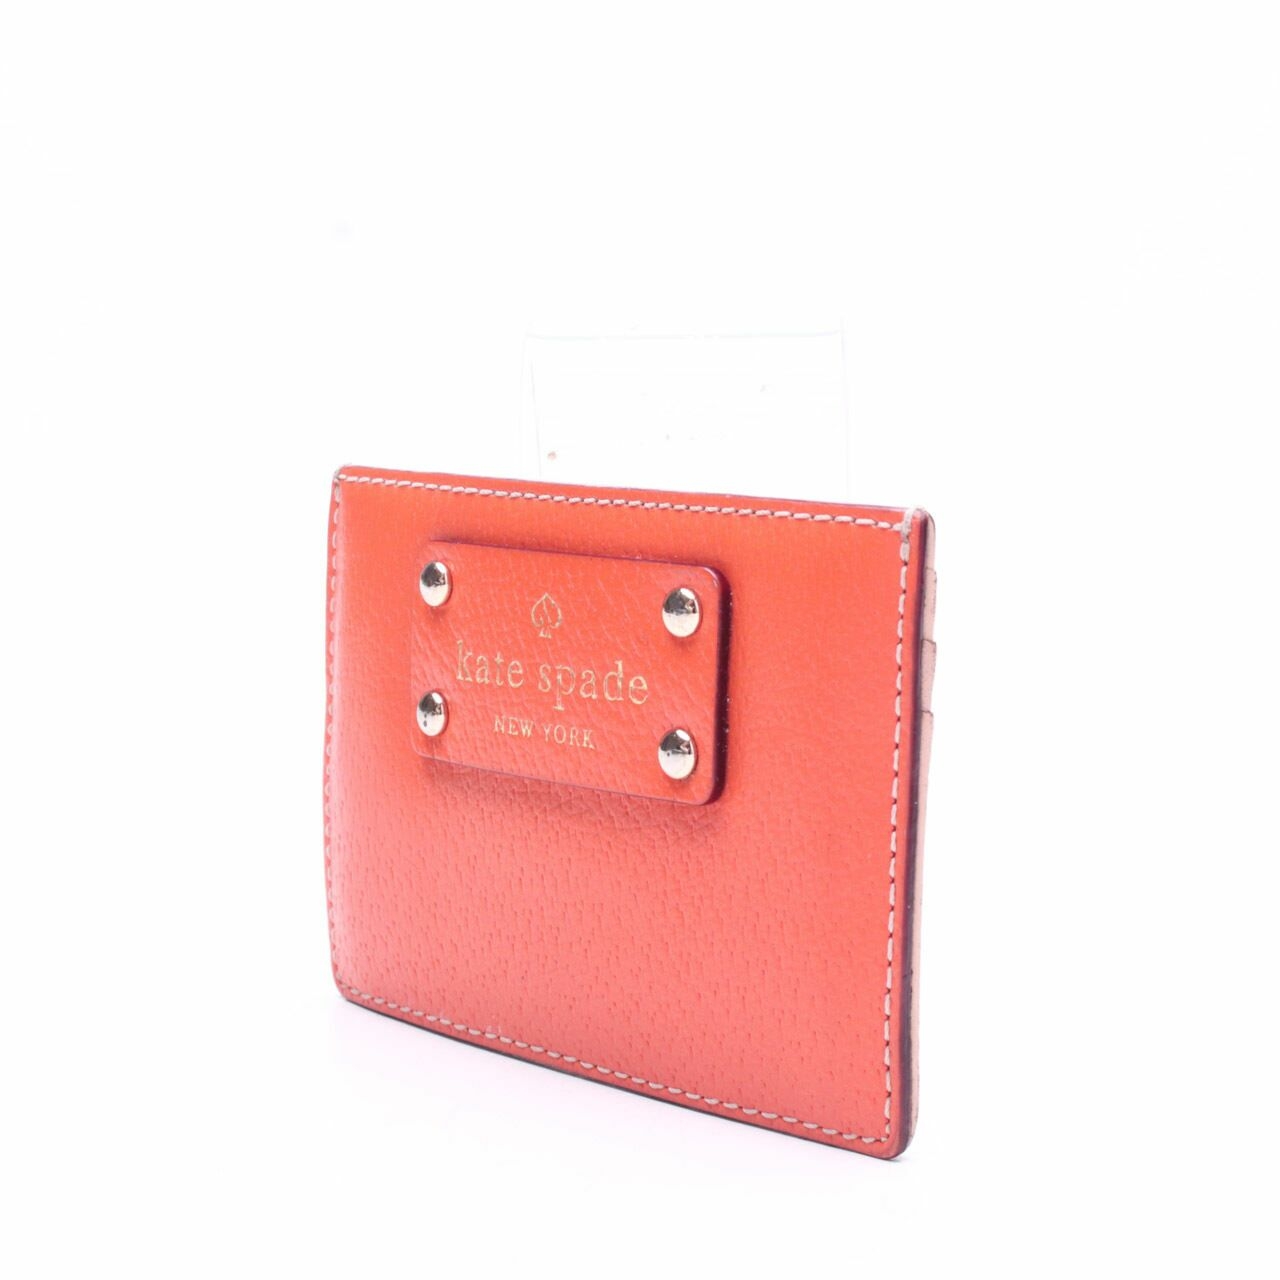 Kate Spade New York Bright Orange Card Holder Wallet